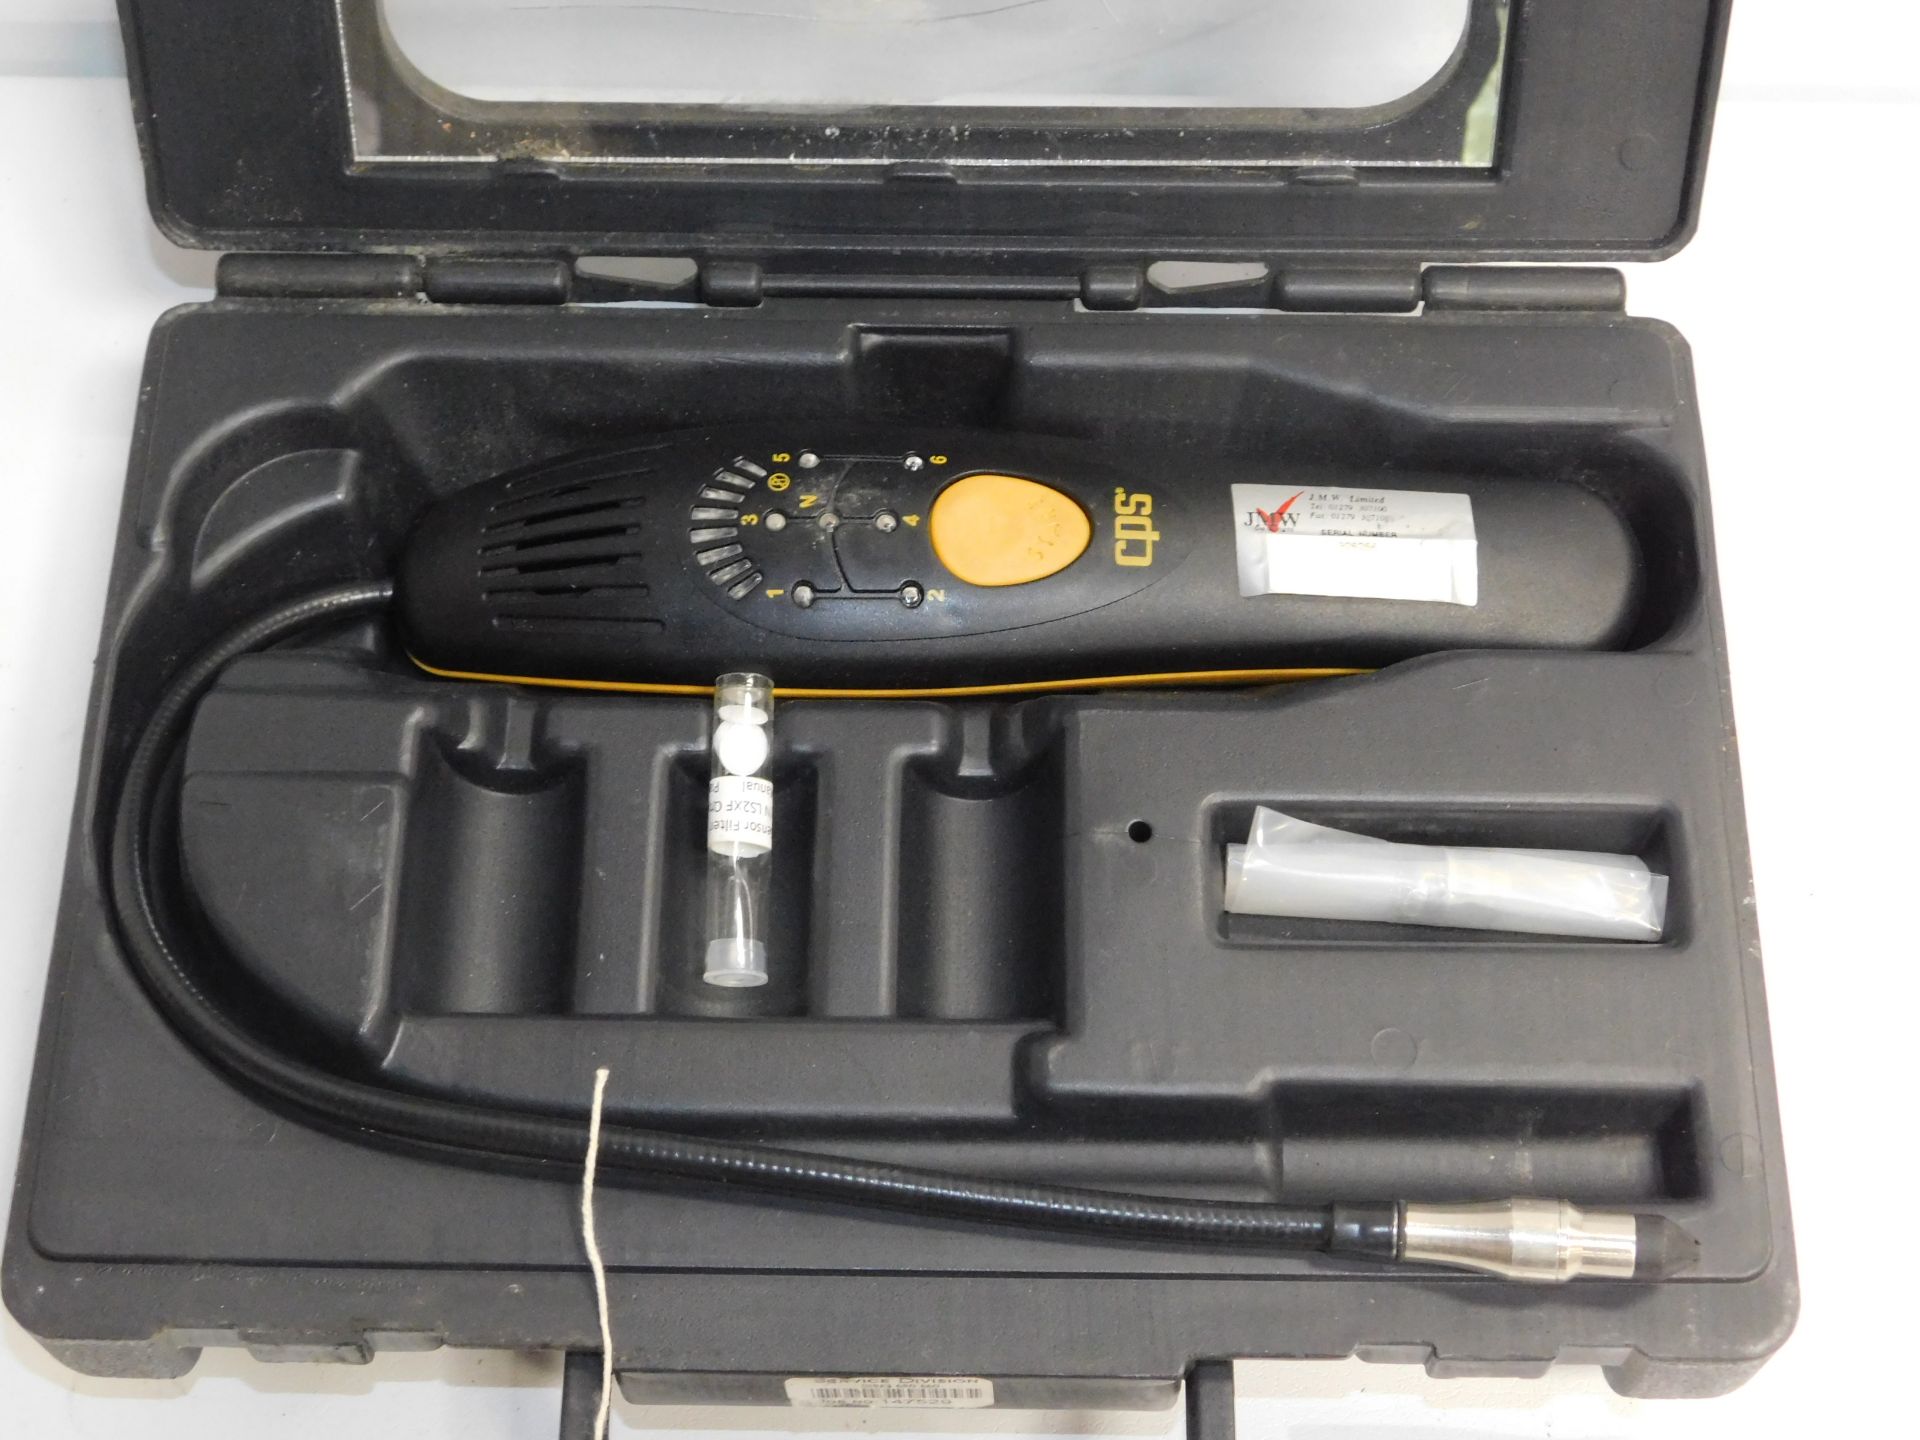 CPS Leak-Seeker II Refrigerant Leak Detector (Location Brentwood. Please Refer to General Notes) - Image 2 of 3